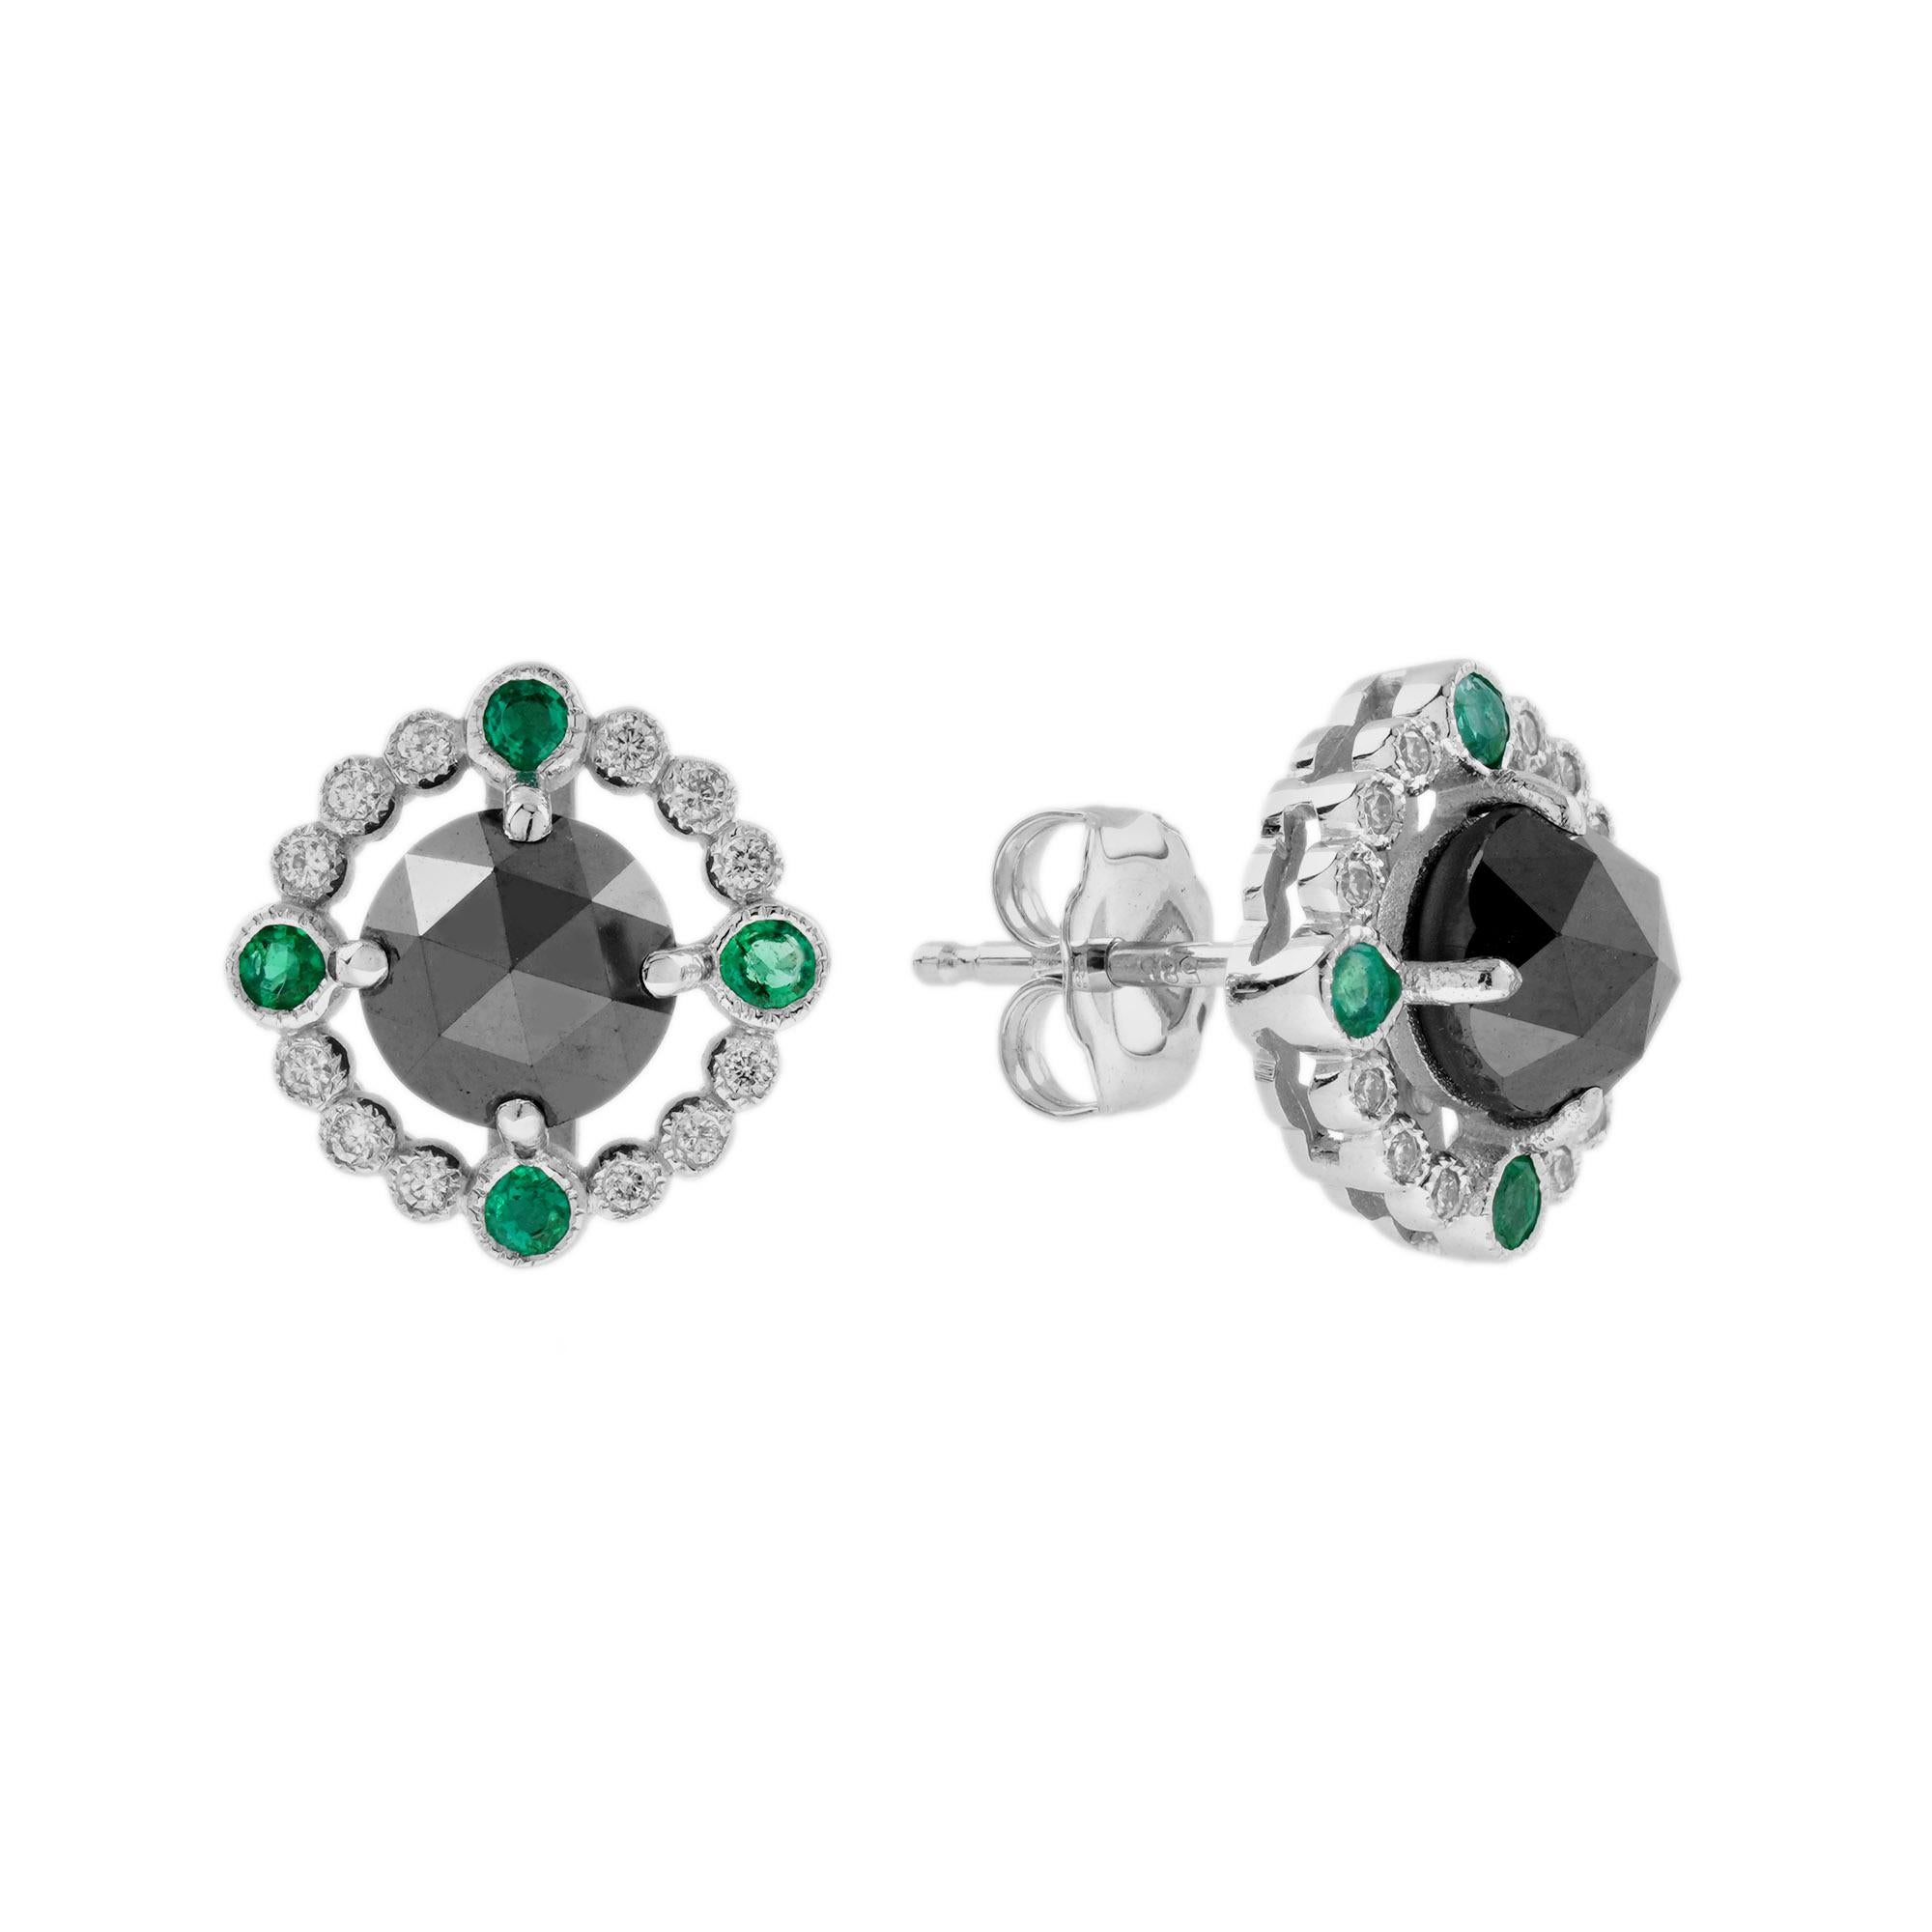 Rose Cut 2.75 Ct. Black Diamond Emerald Art Deco Inspired Stud Earrings in 14K Gold